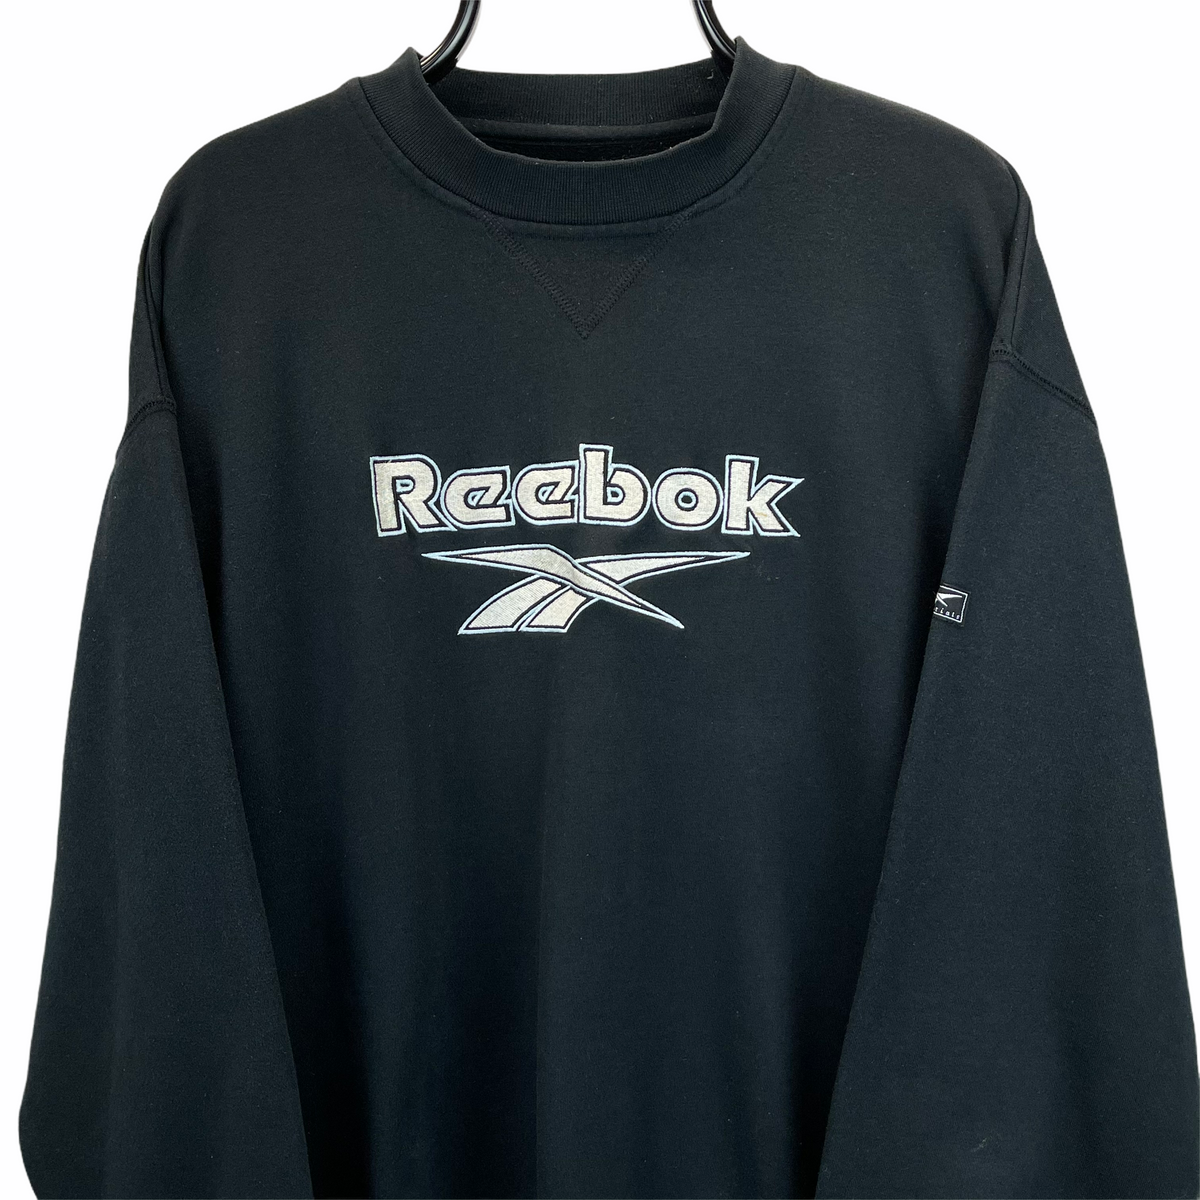 Vintage 90s Reebok Spellout Sweatshirt in Black - Men's Large/Women's ...